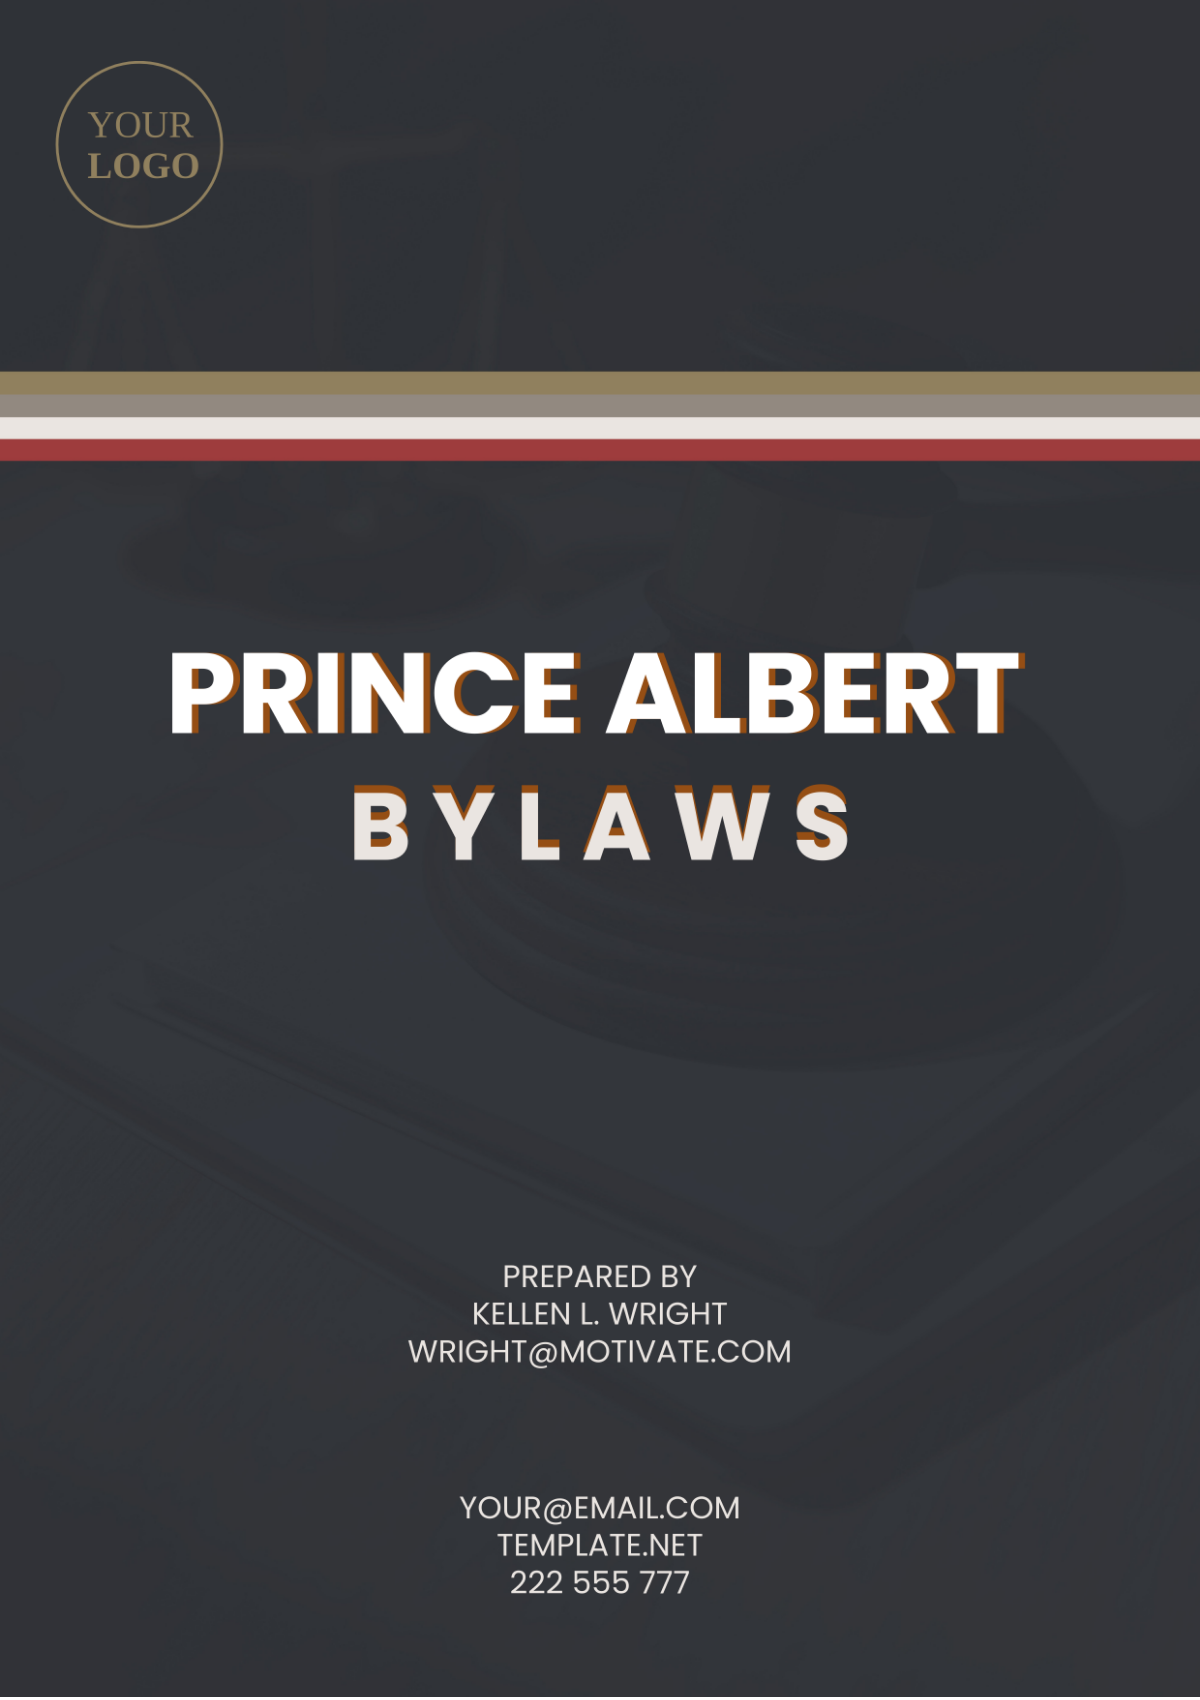 Prince Albert Bylaws Template